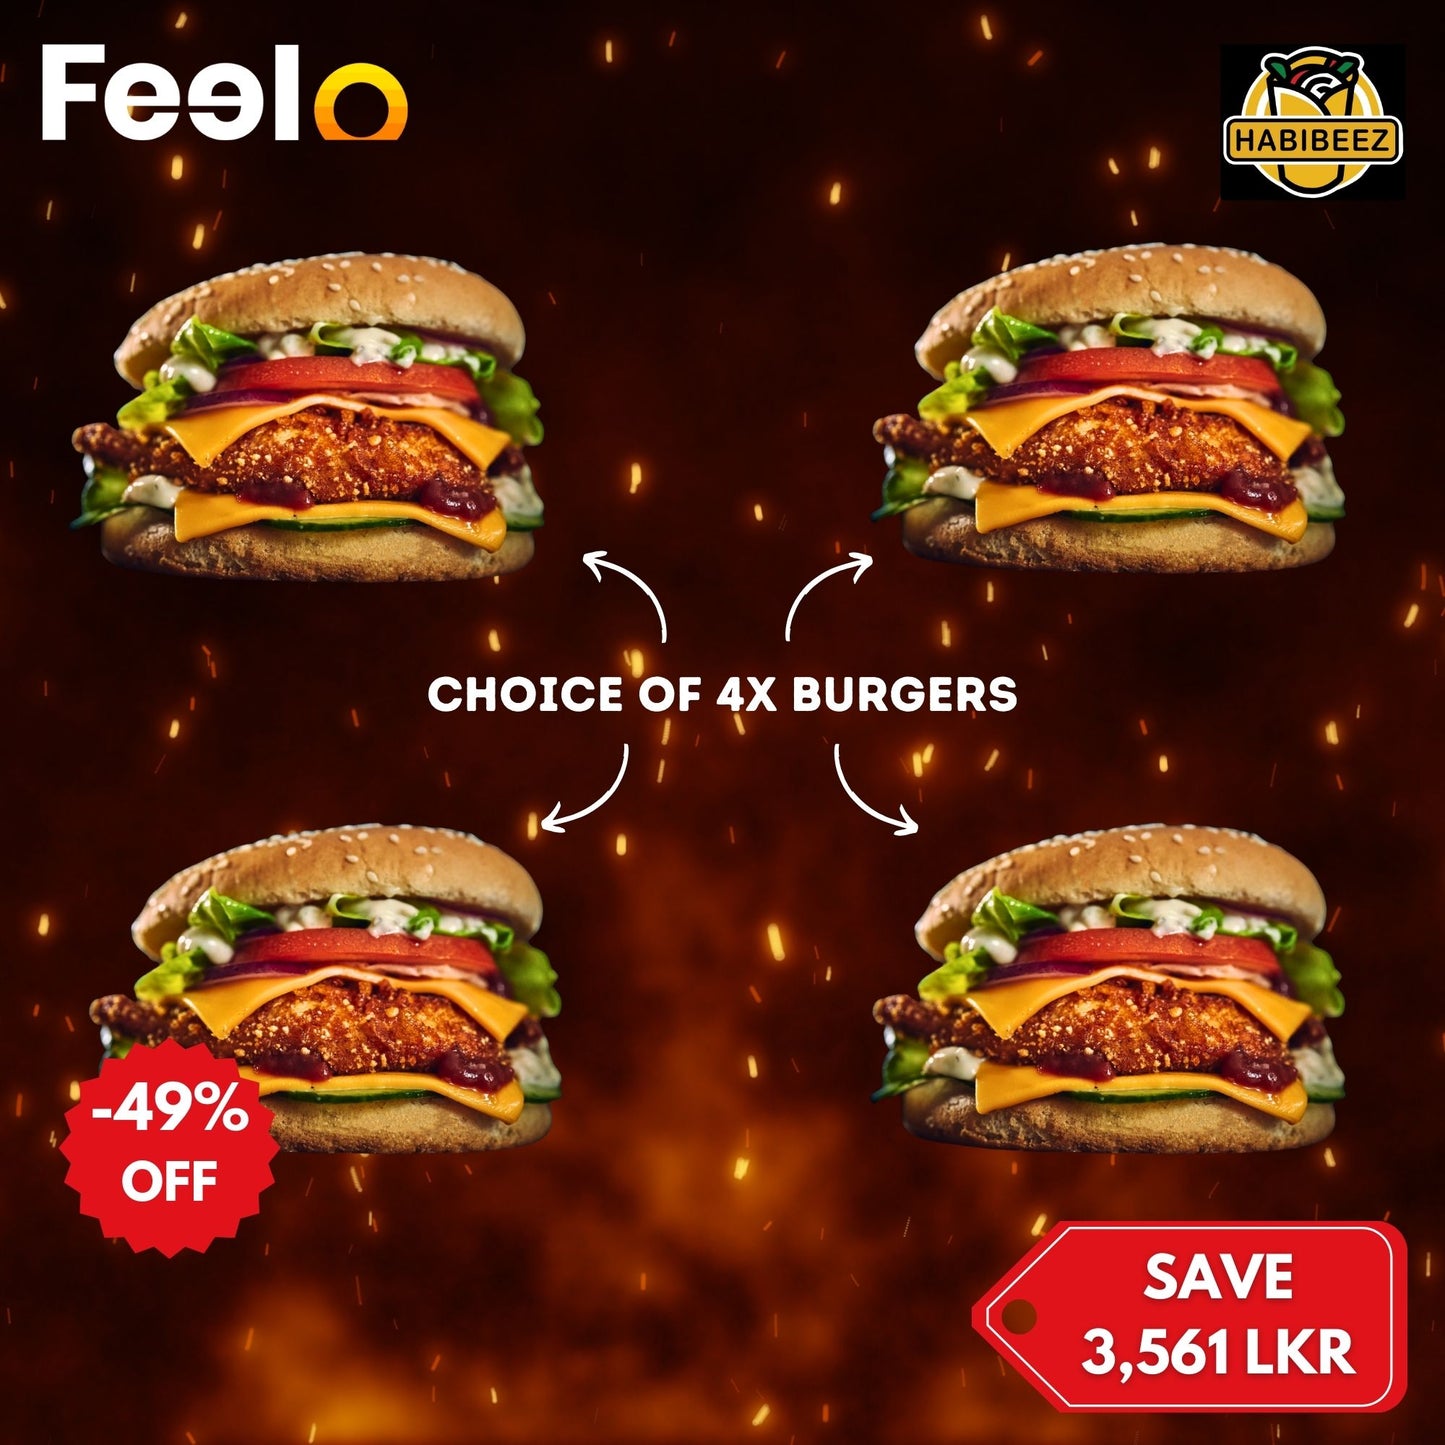 Delicious Habibeez Special Burgers of your choice - Habibeez, Colombo 02 | Feelo